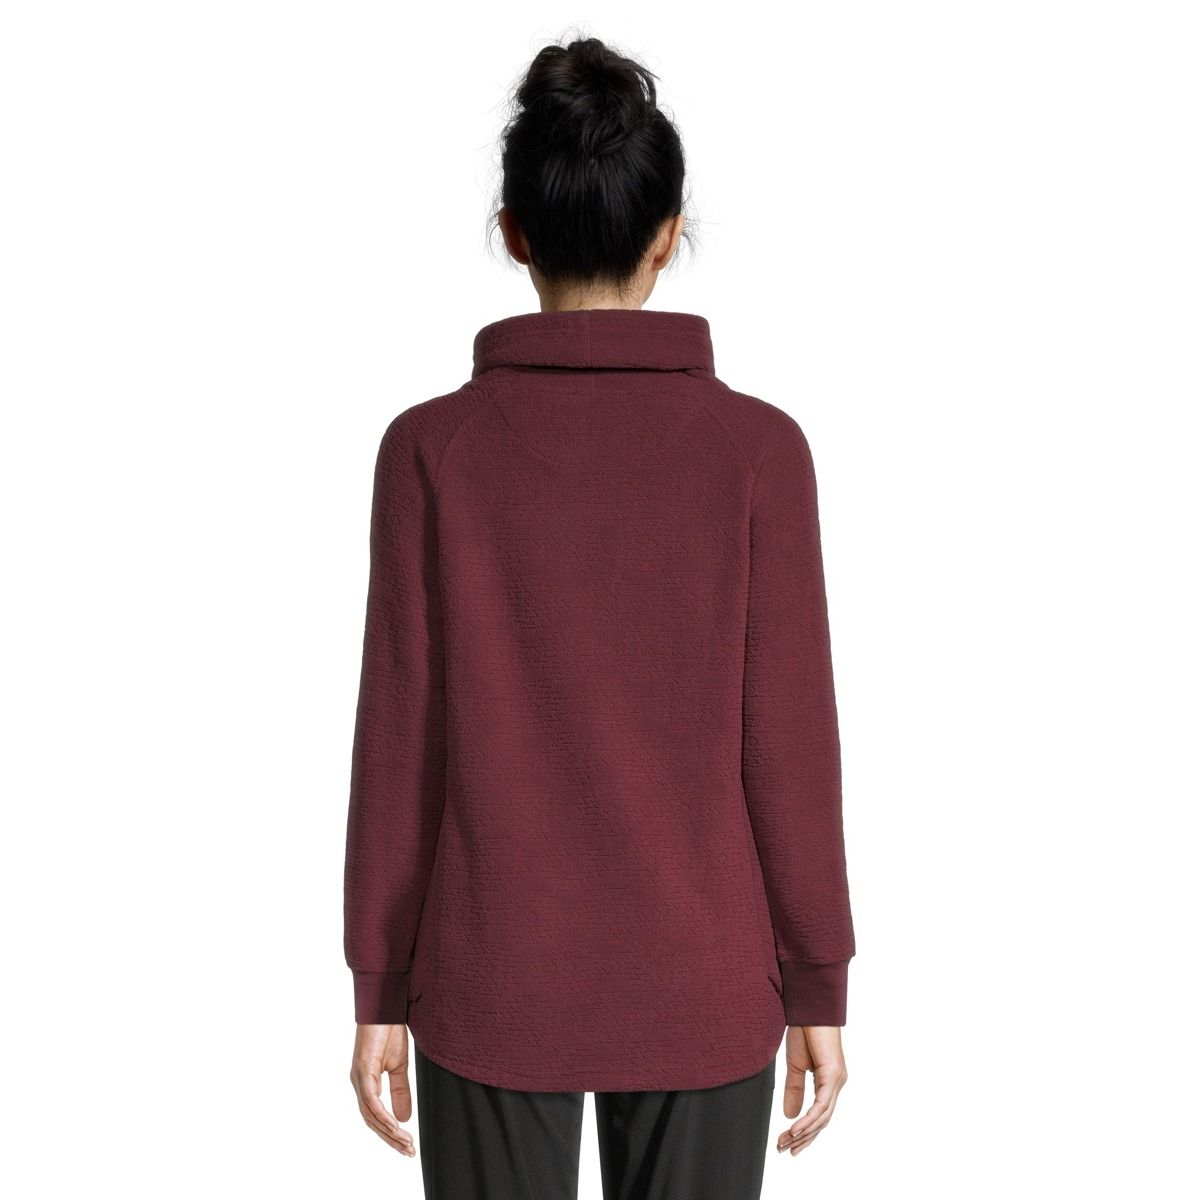 Woods Women's Copeland Turtleneck Fleece Sweatshirt, Plus Size